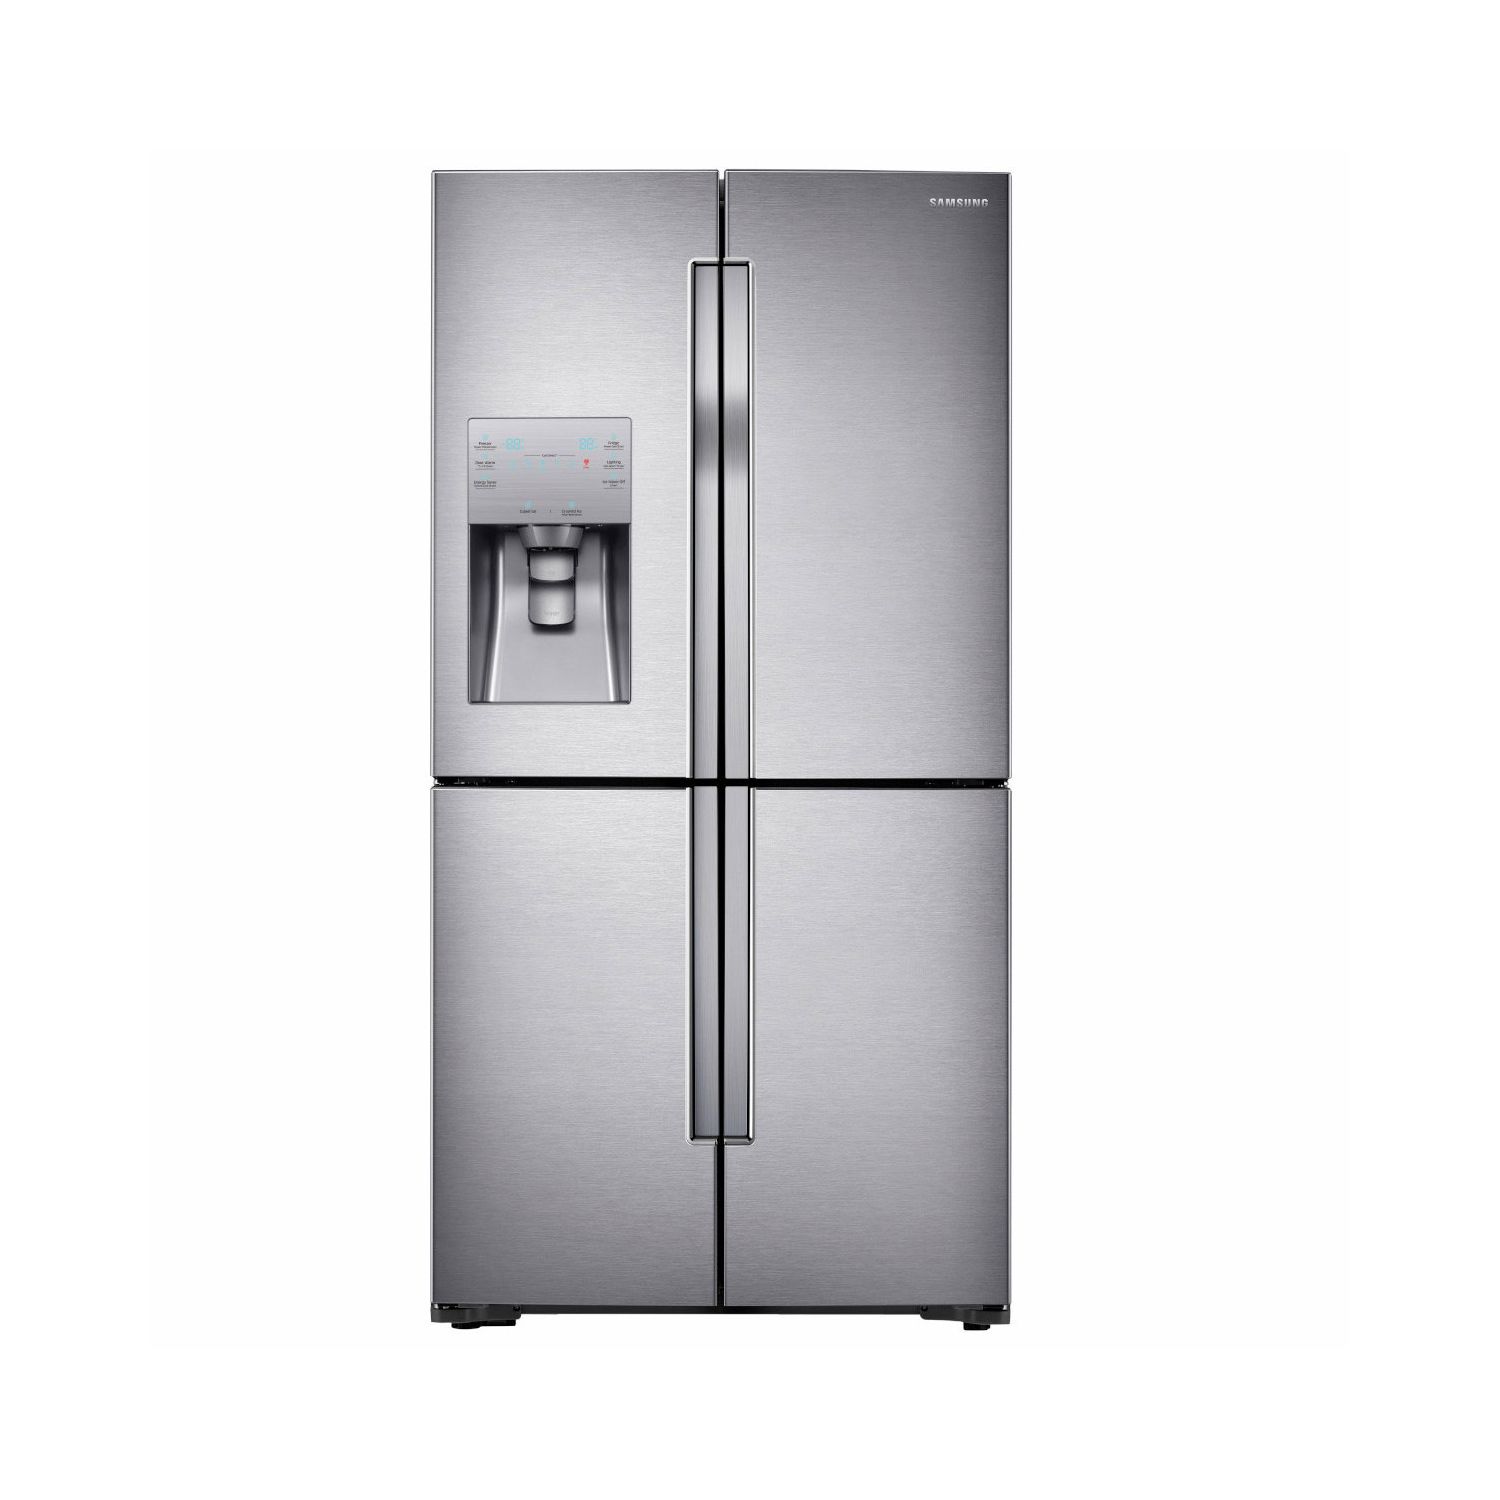 Samsung RF23J9011SR 22.5 Cu. Ft. Counter-Depth 4-Door Flex Refrigerator with FlexZone, Stainless Steel Finish